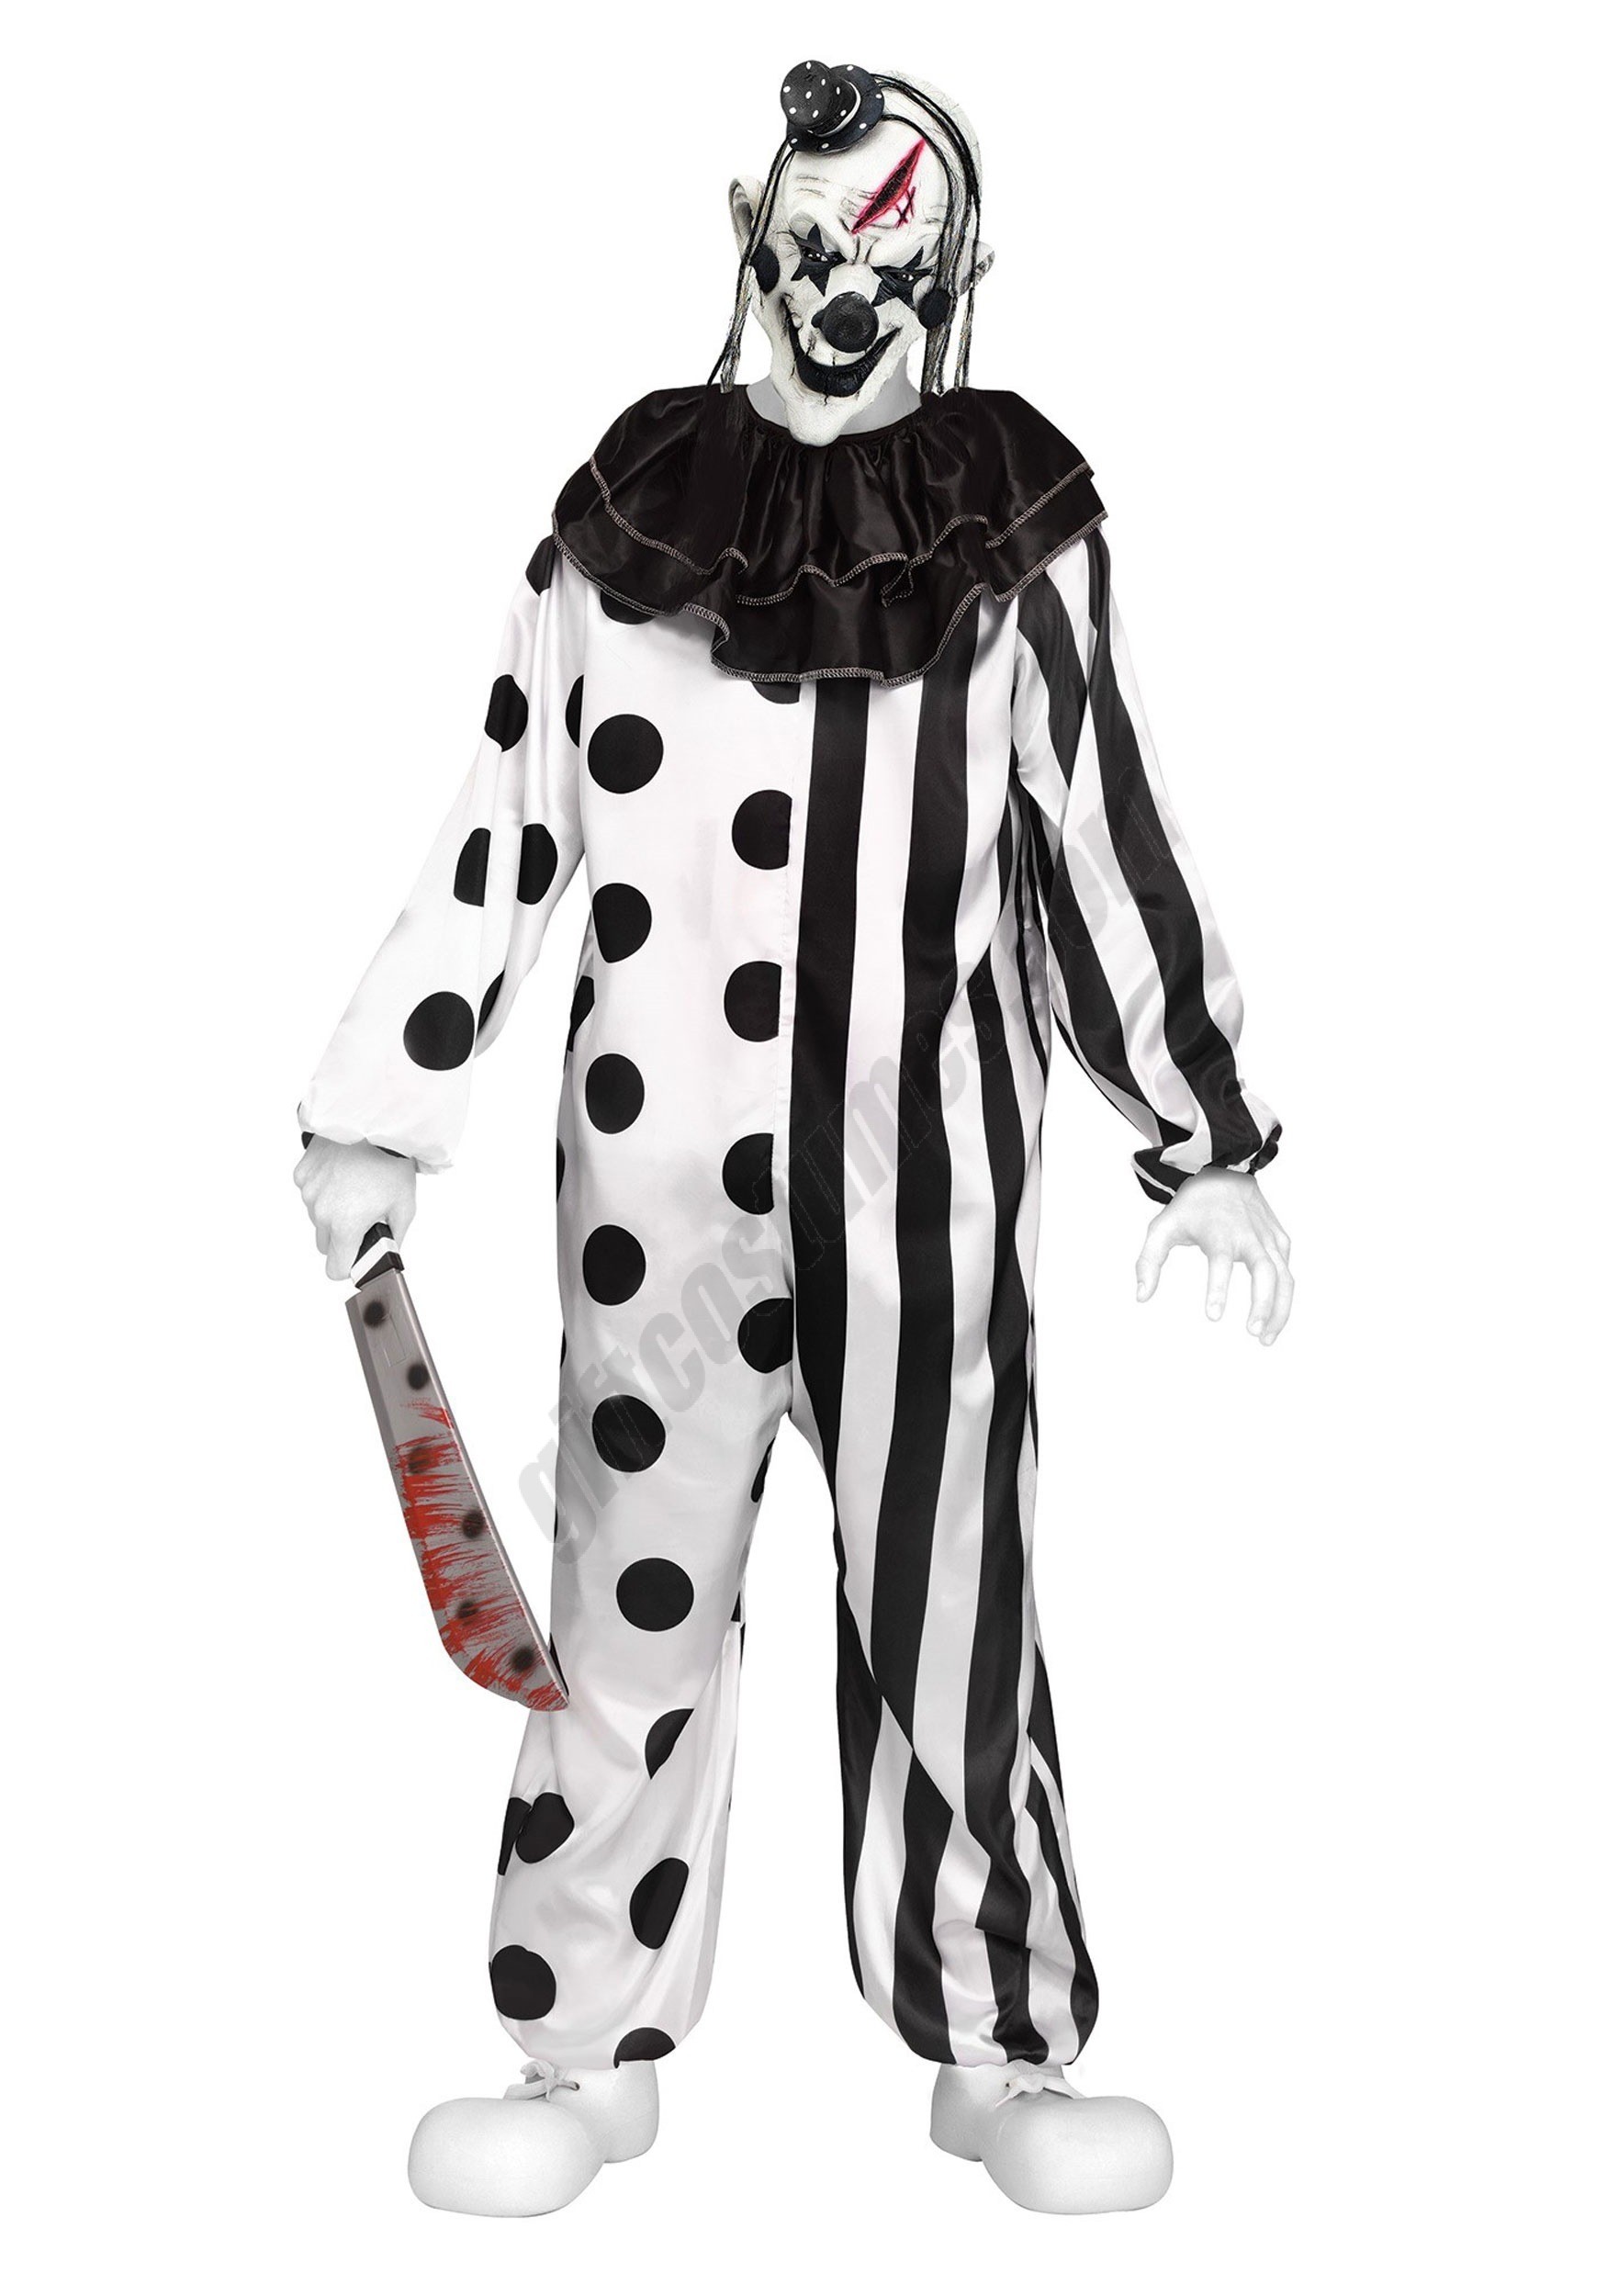 Teen Killer Clown Costume Promotions - Teen Killer Clown Costume Promotions